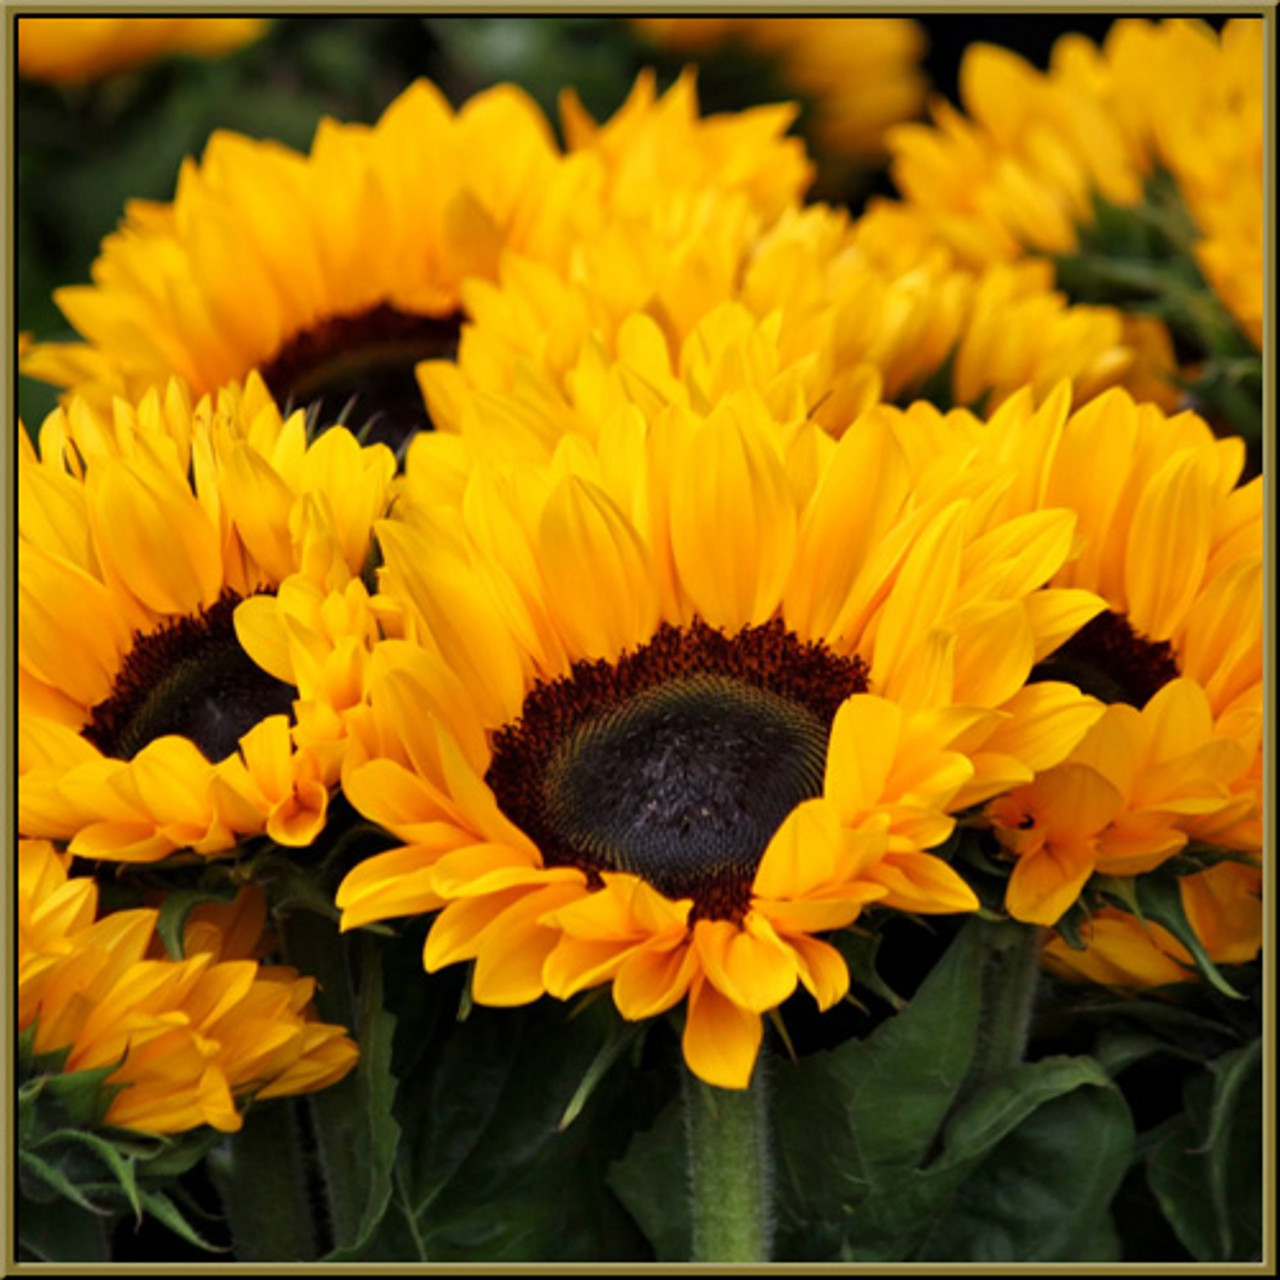 Sunflowers - Oberer’s Flowers